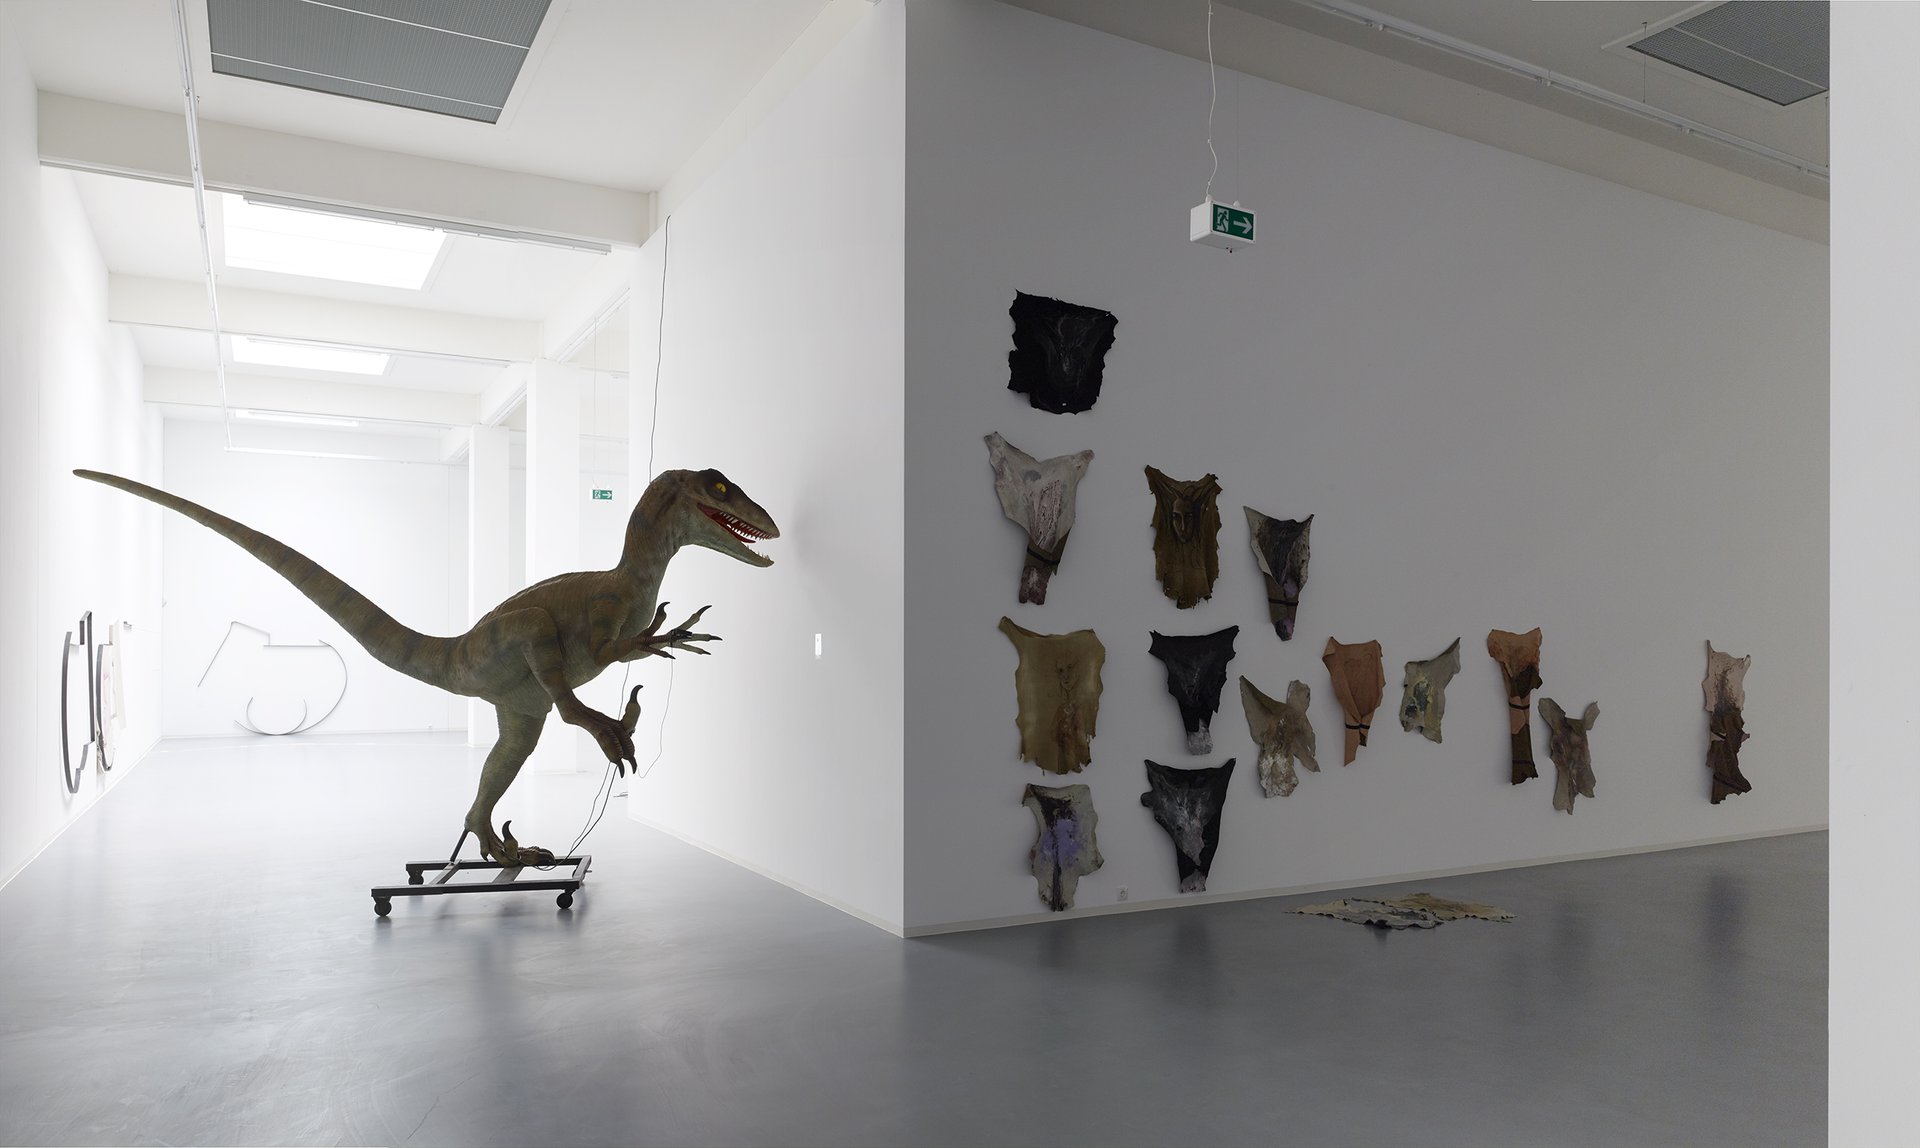 Raphaela Vogel, Raphaela und der große Kunstverein, installation view, 2015, Bonner Kunstverein. Courtesy the artist and BQ, Berlin. Photo: Simon Vogel